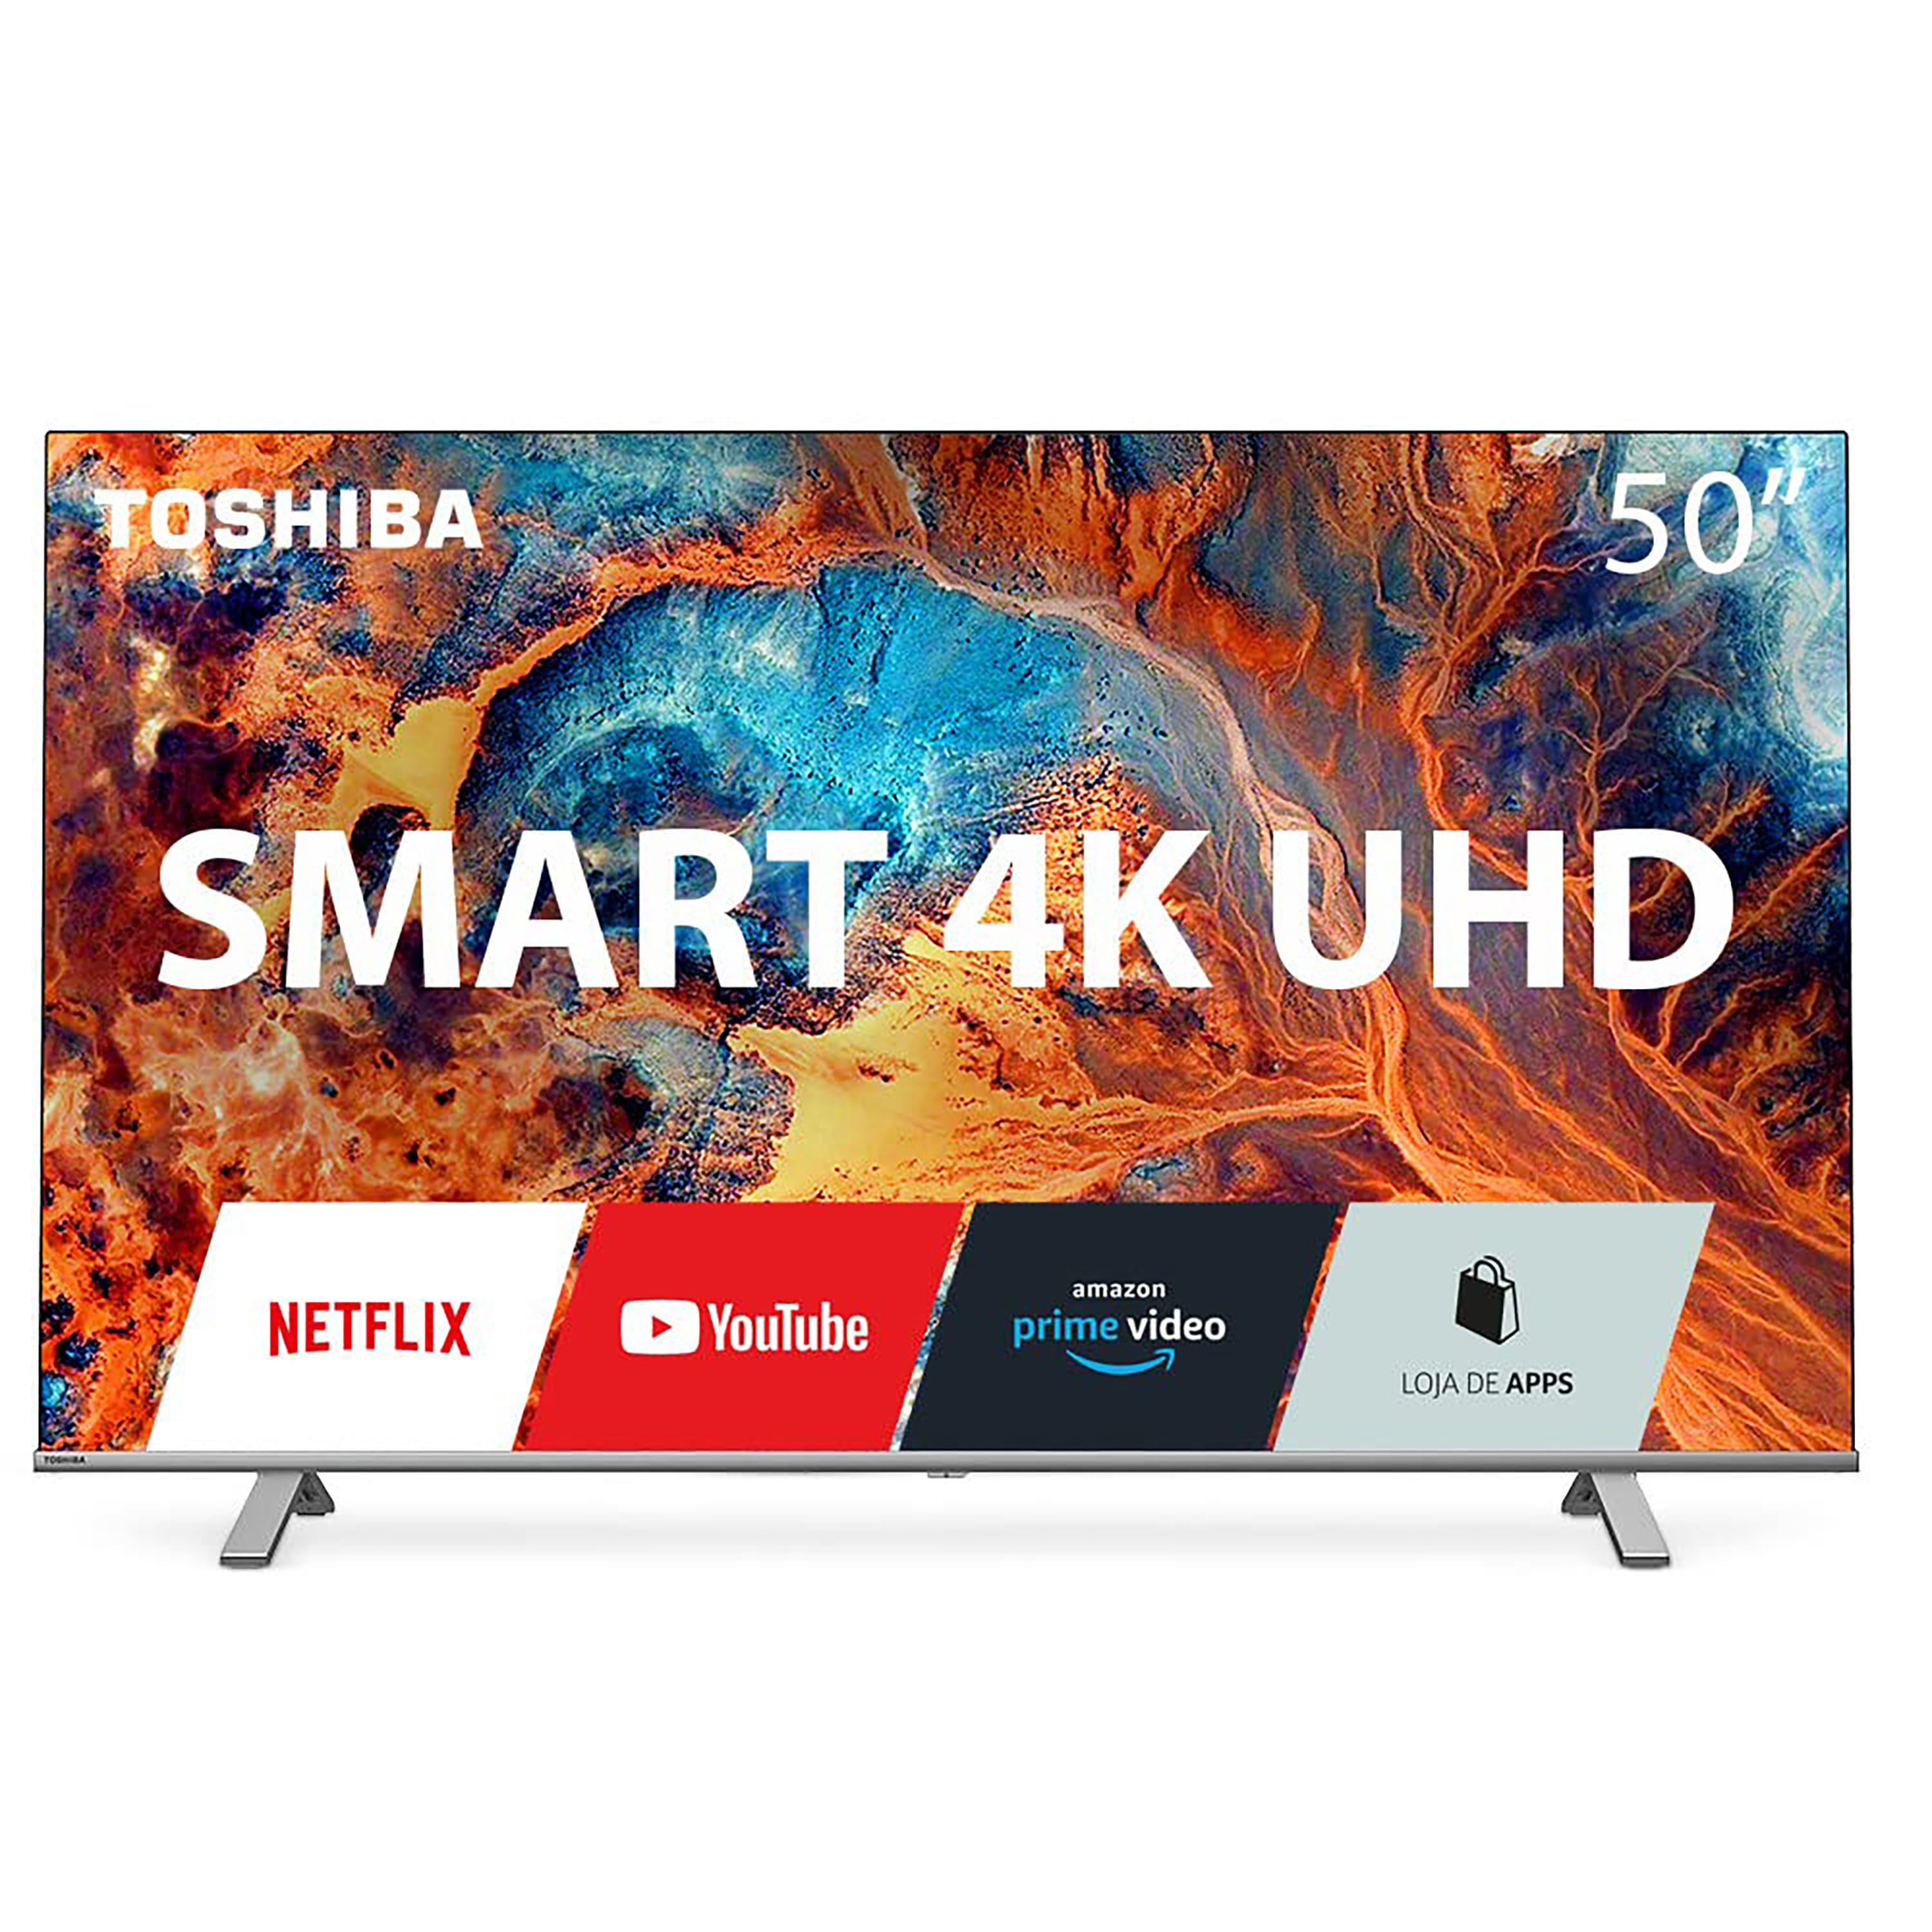 Pantalla Durabrand Led Smart TV 4K 50 Pulgadas Mod: Dura50Mugs2